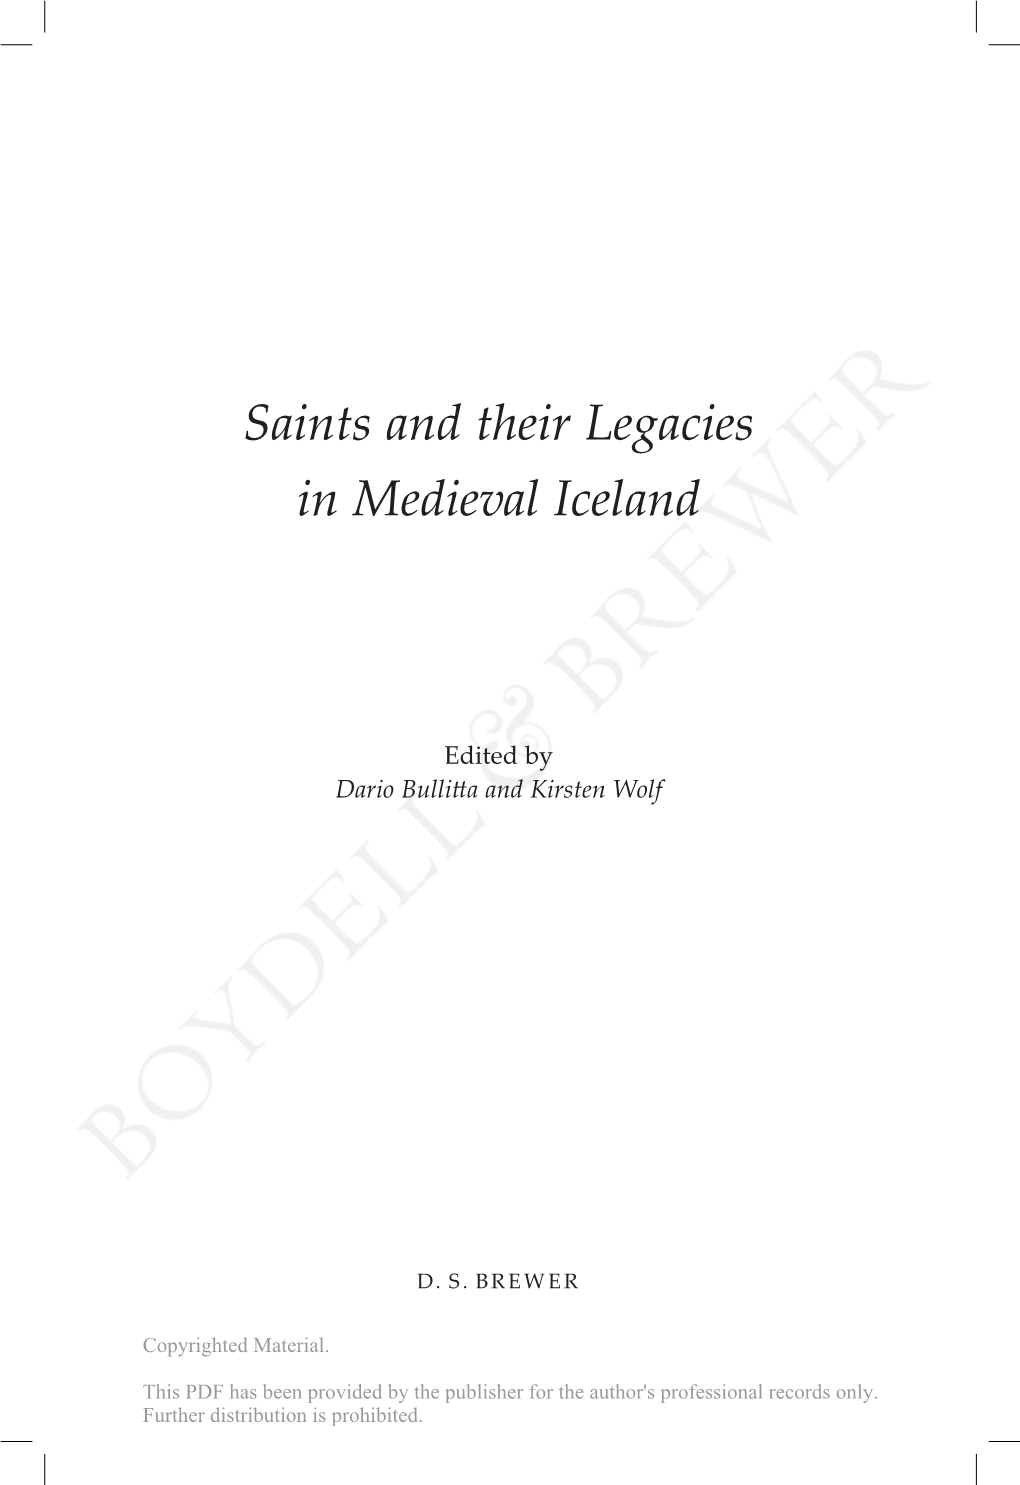 Saints and Their Legacies in Medieval Iceland